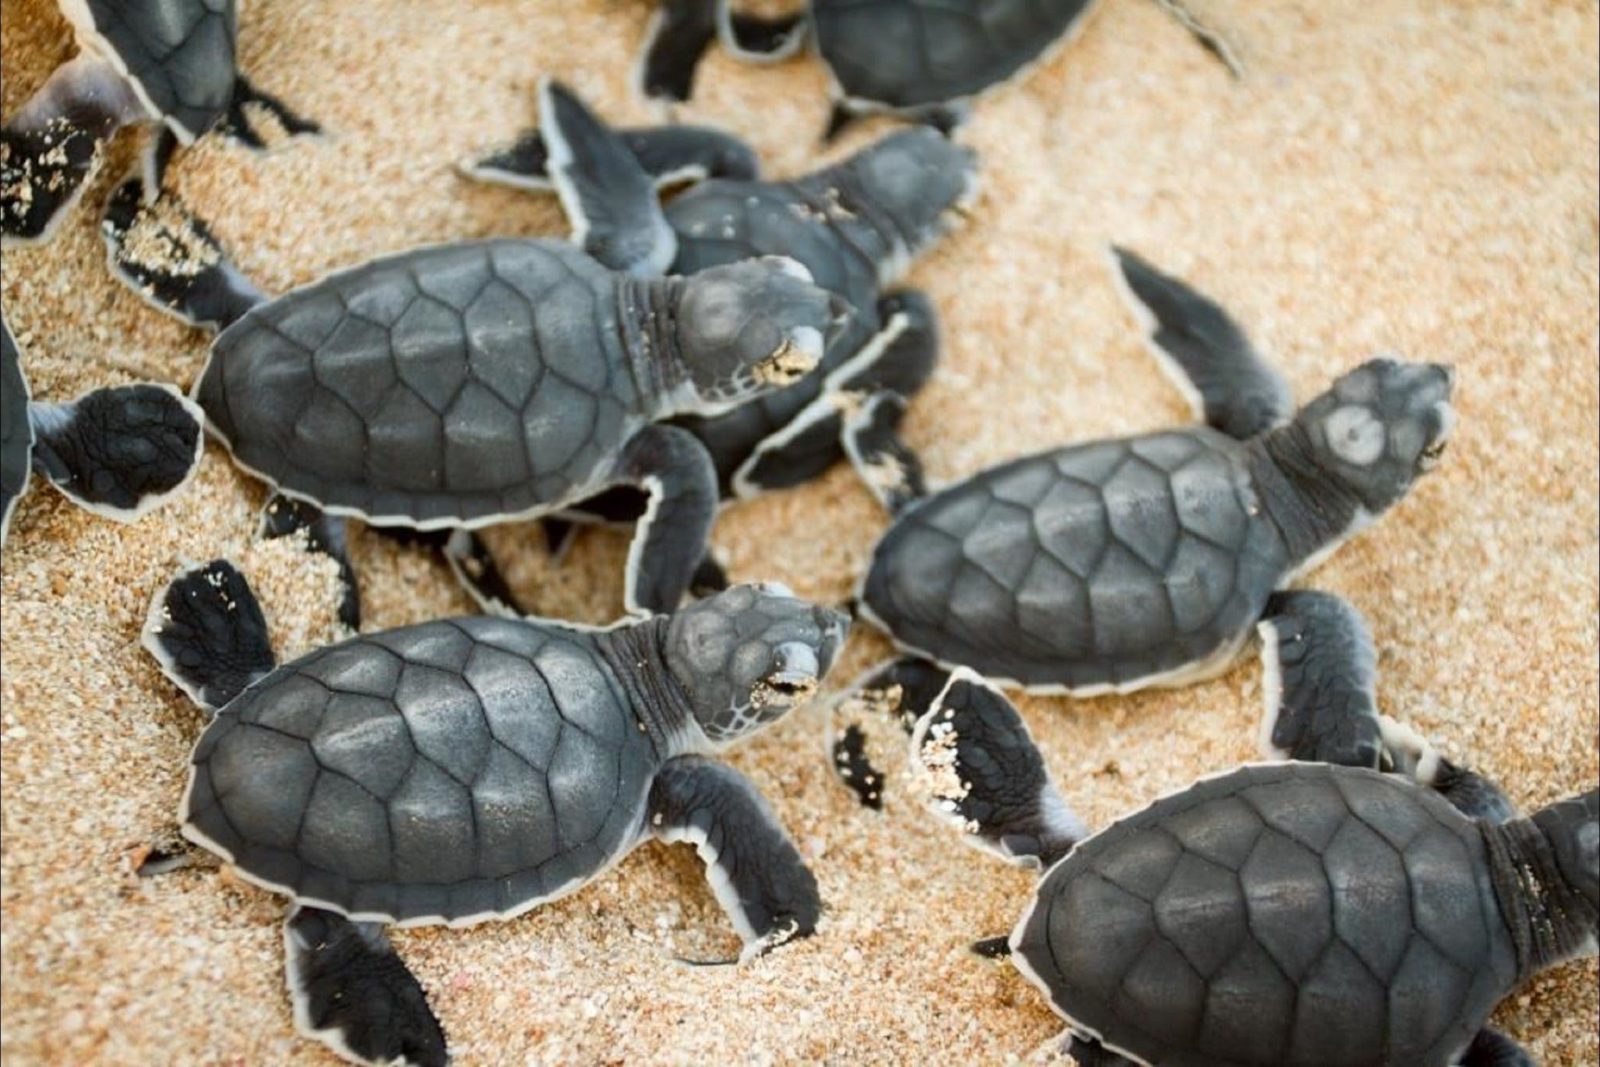 Turtle Nesting Season, Exmouth, Western Australia